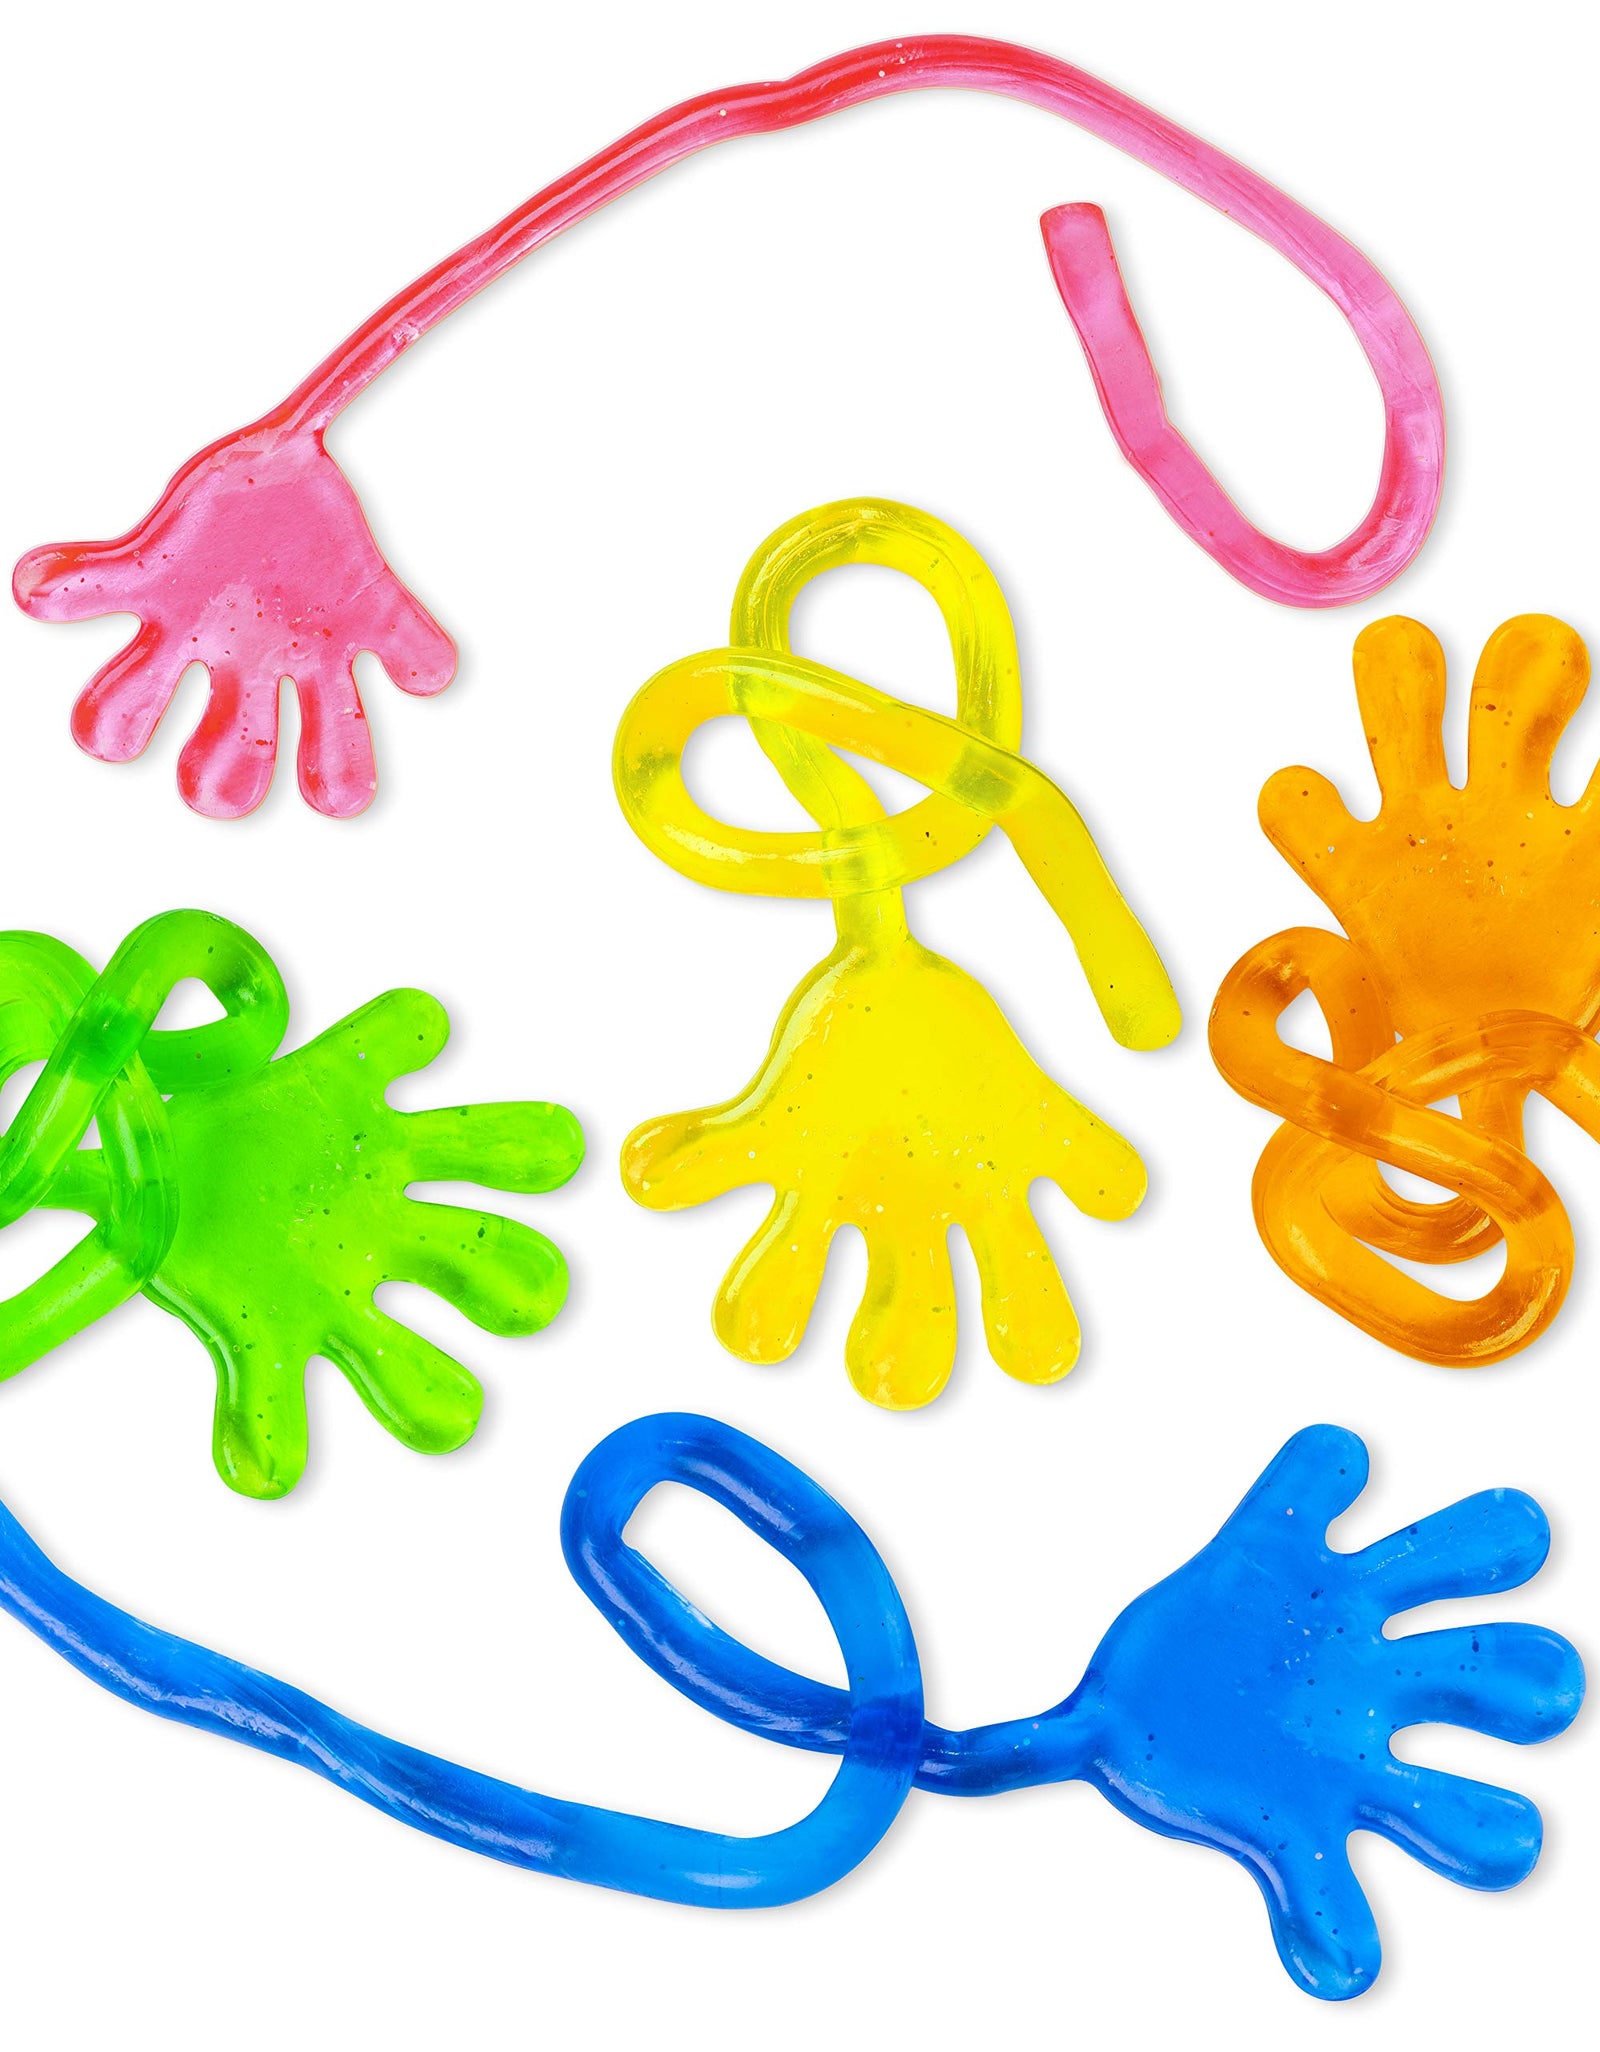 Super Z Outlet Vinyl Glitter Mini Sticky Hands Toys for Children Party Favors, Birthdays - 1 1/4" (72 Count)